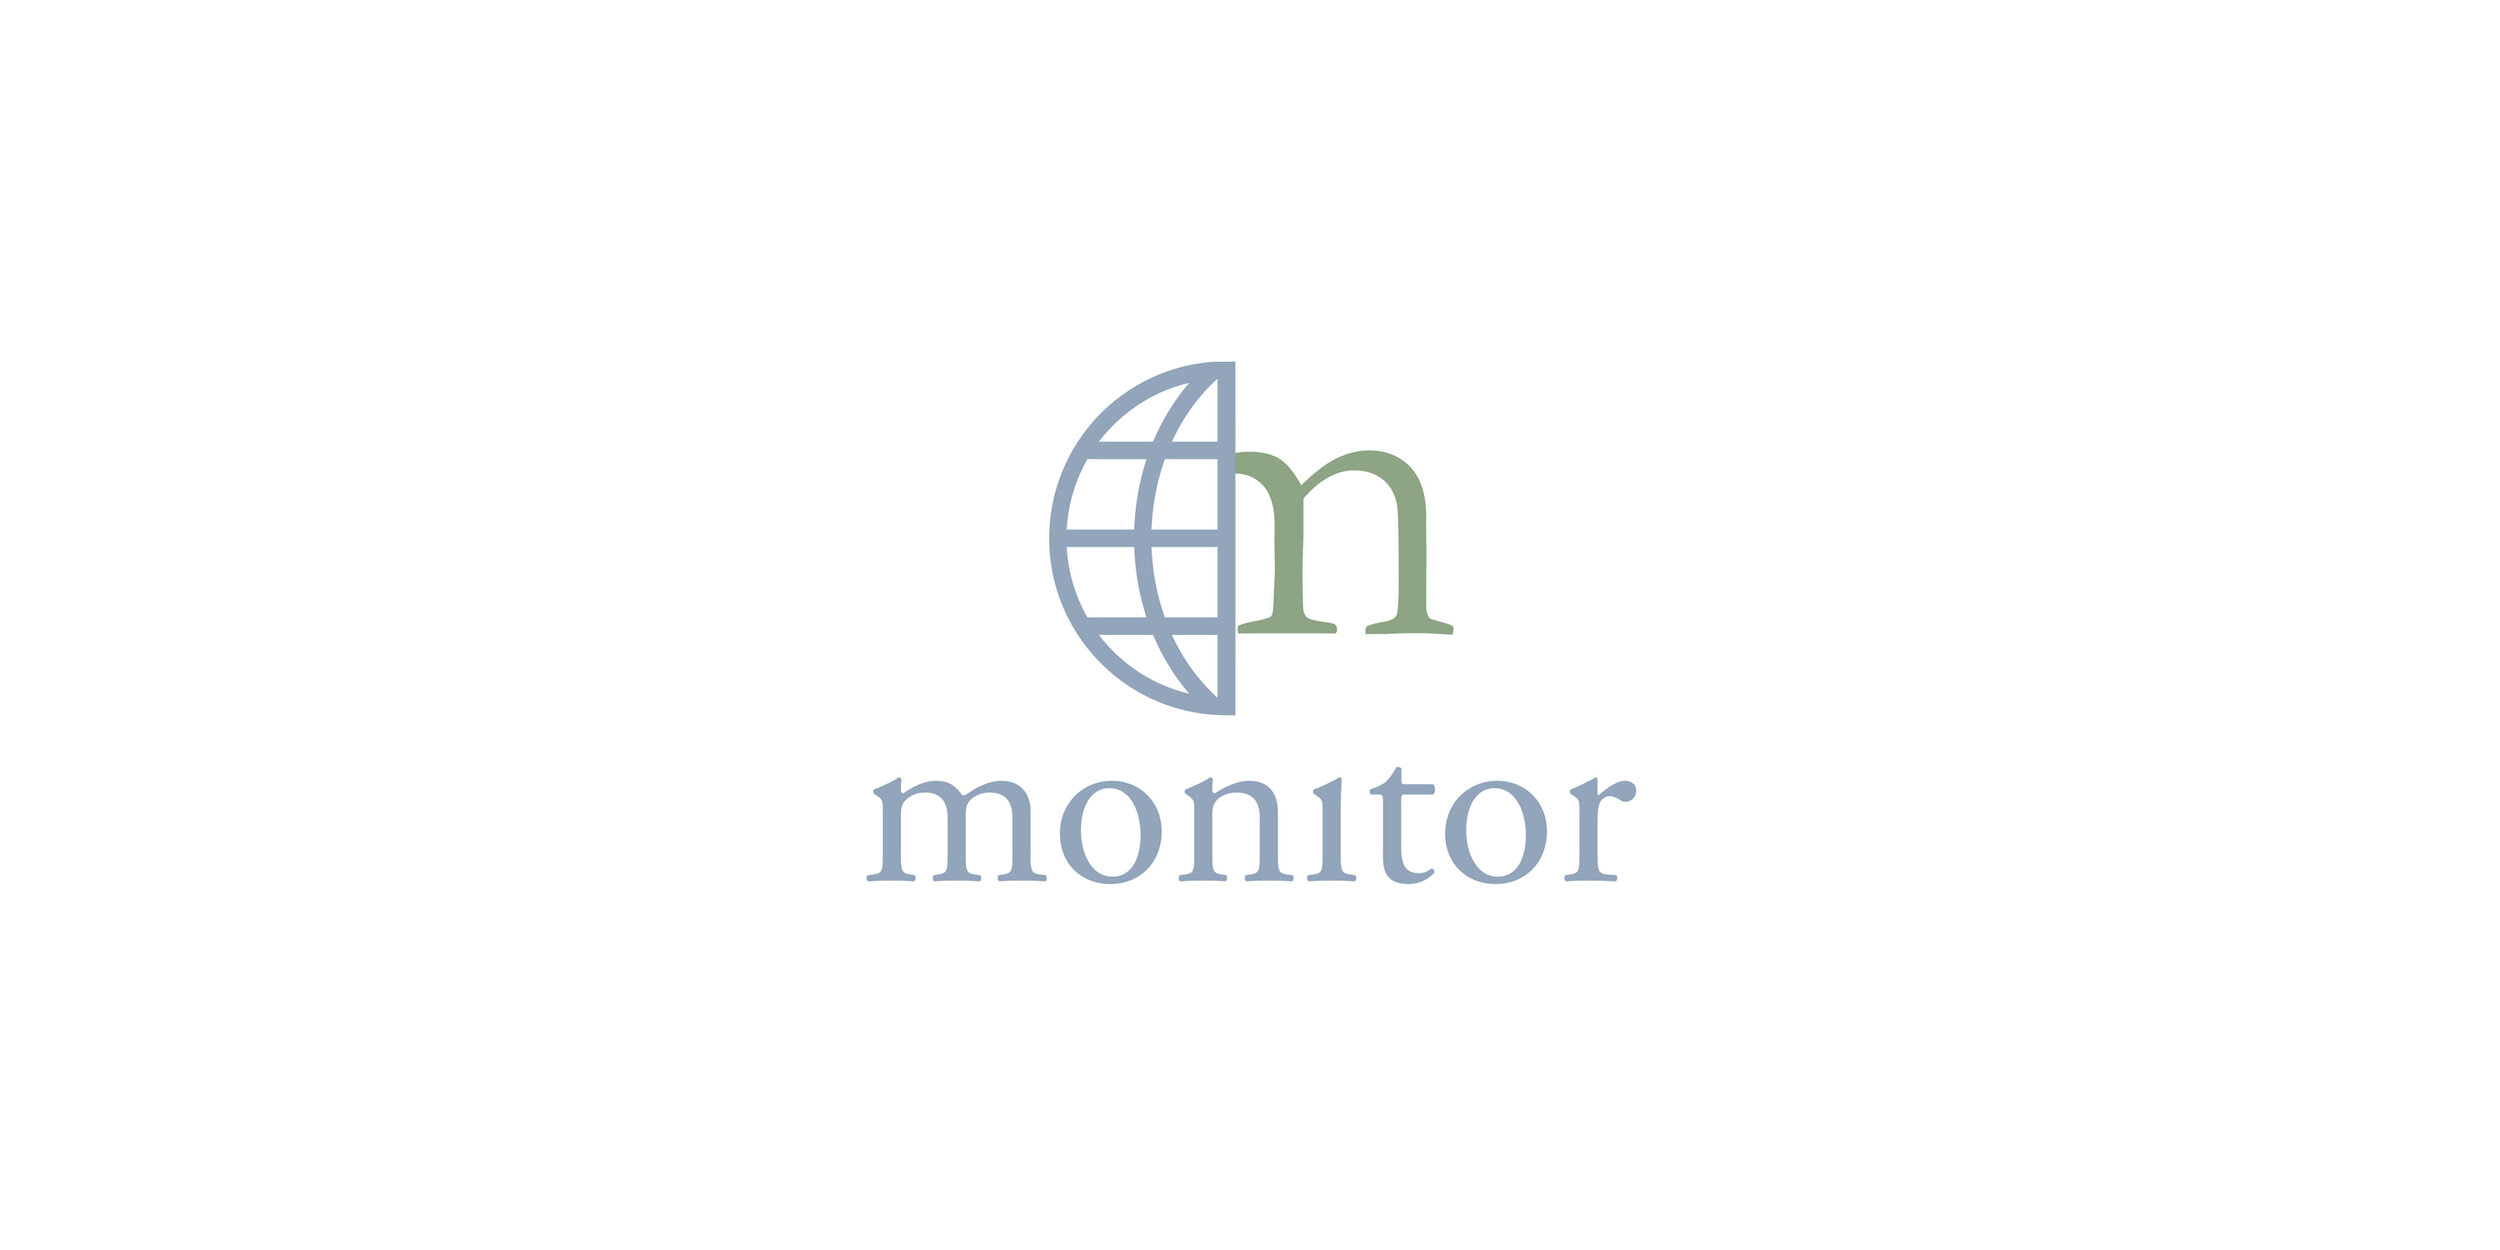 Monitor Group